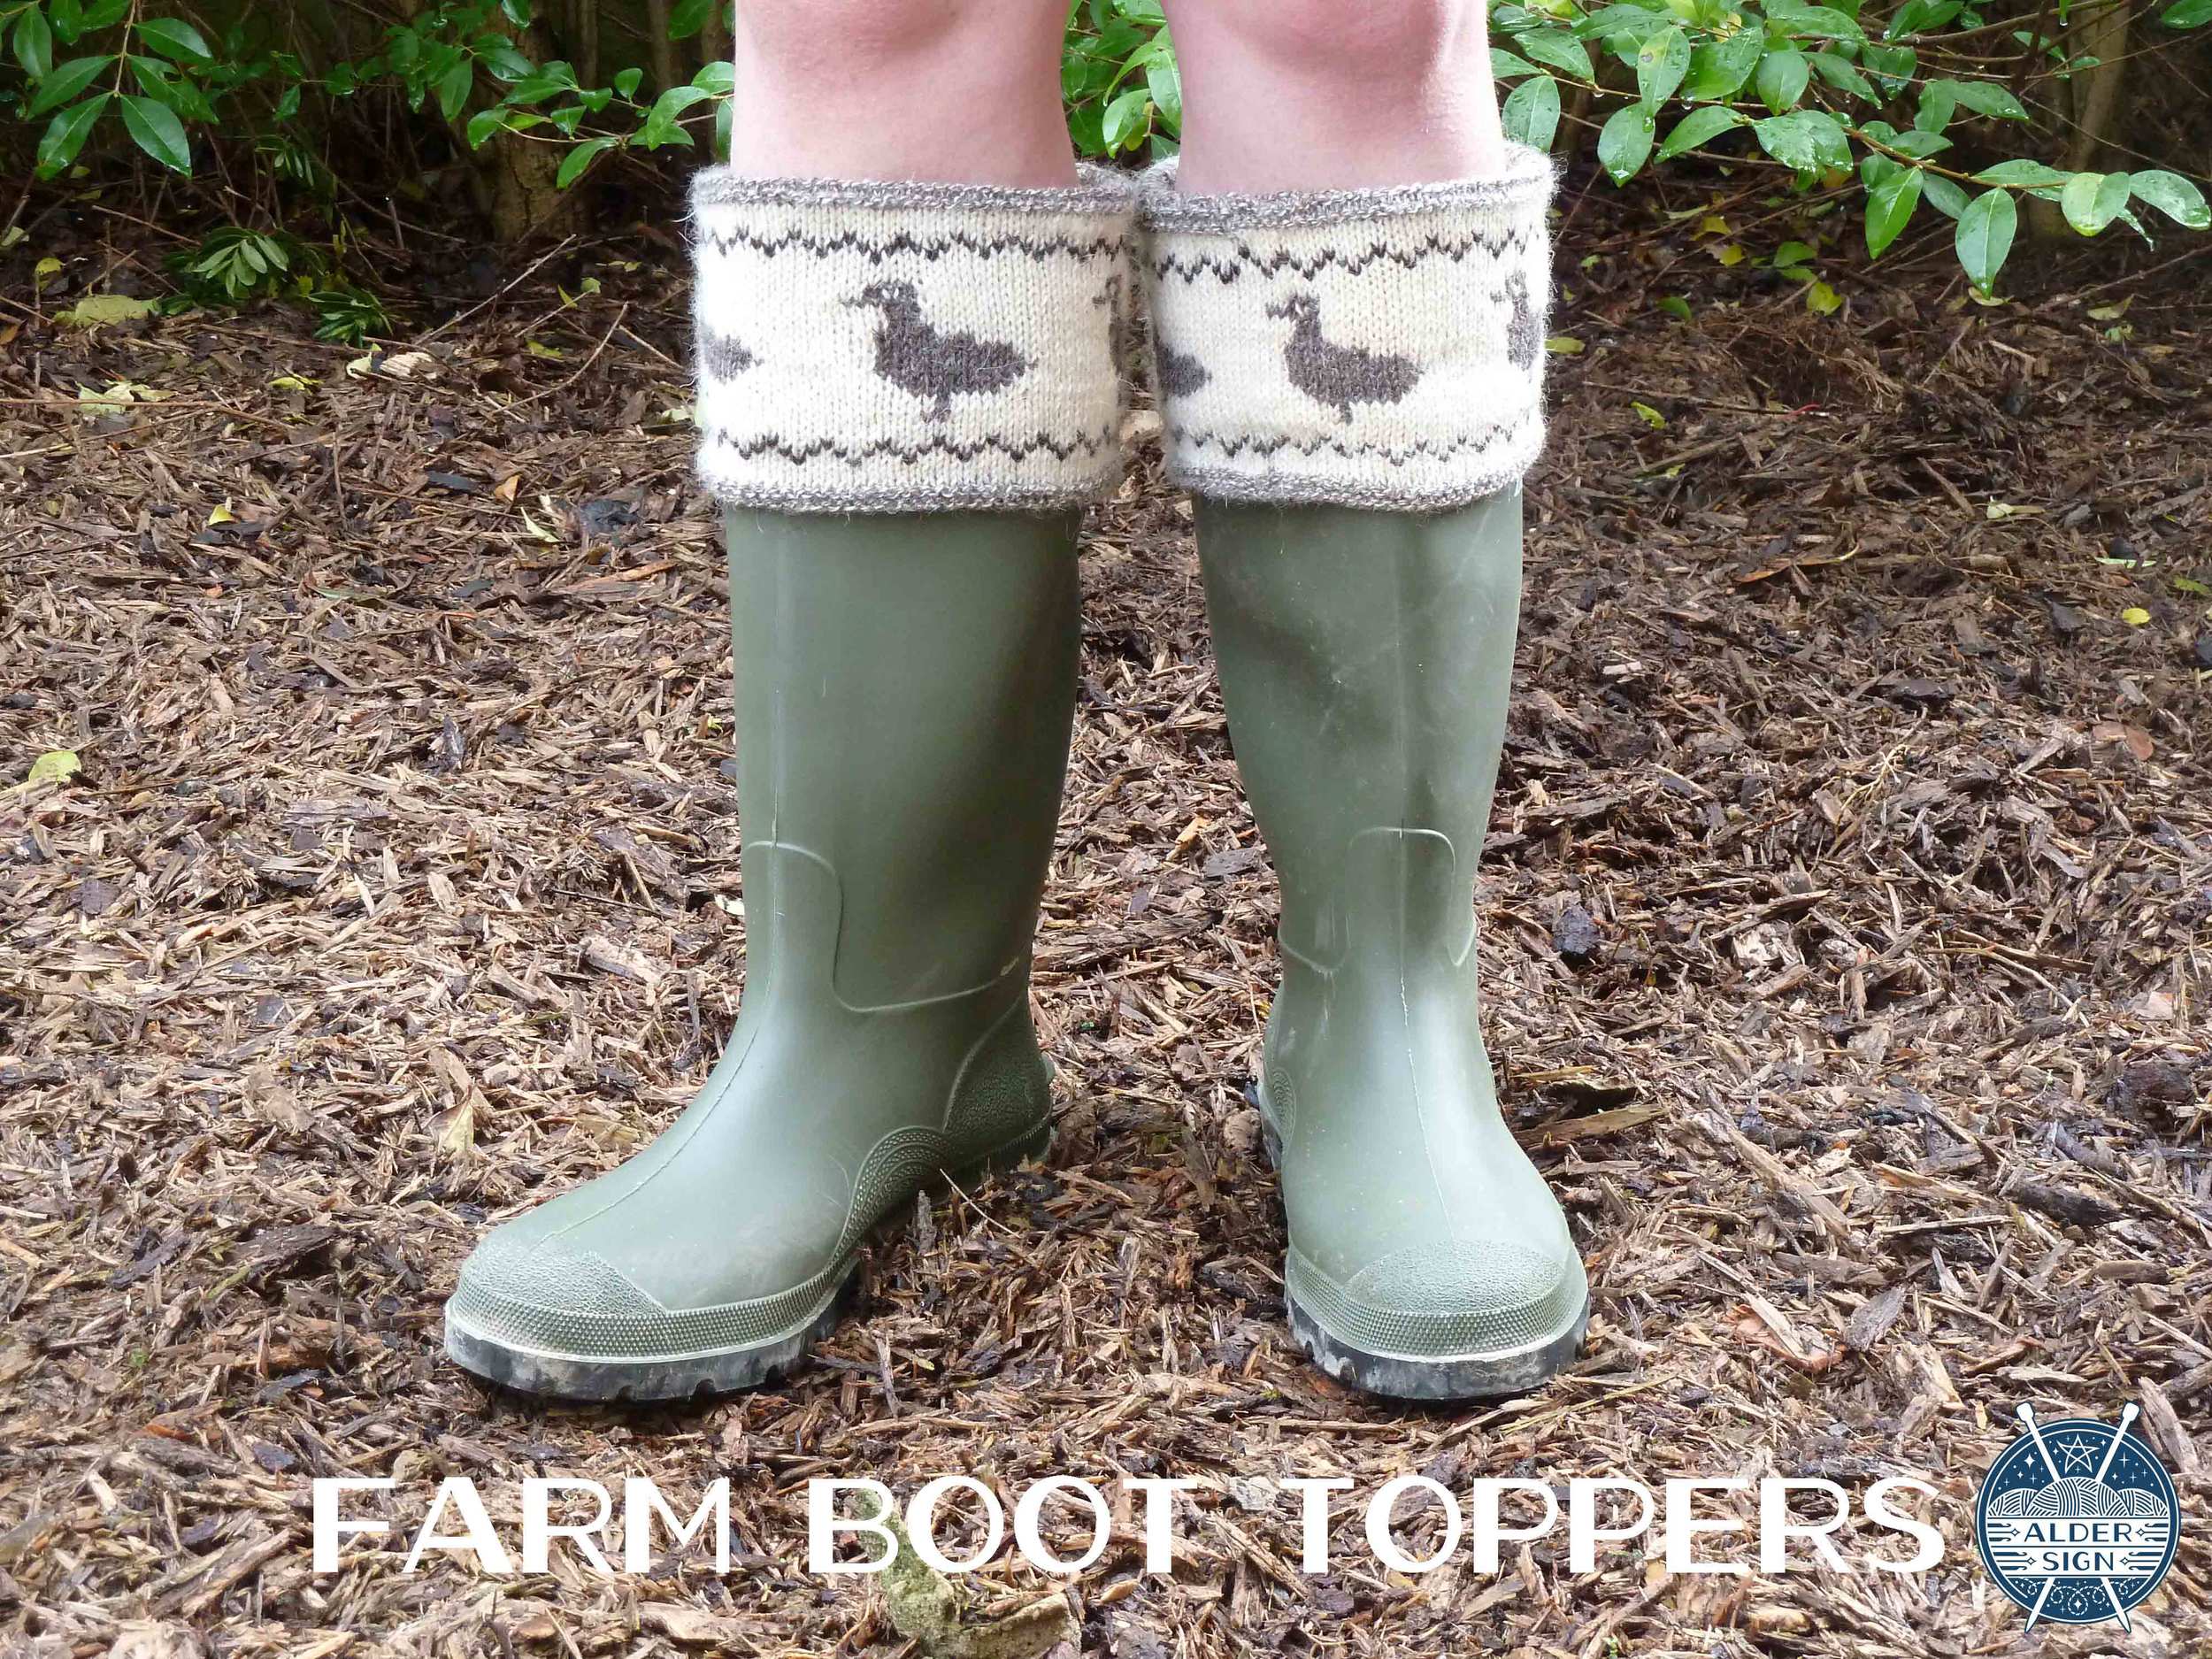 Farm-boot-toppers-logo.jpg